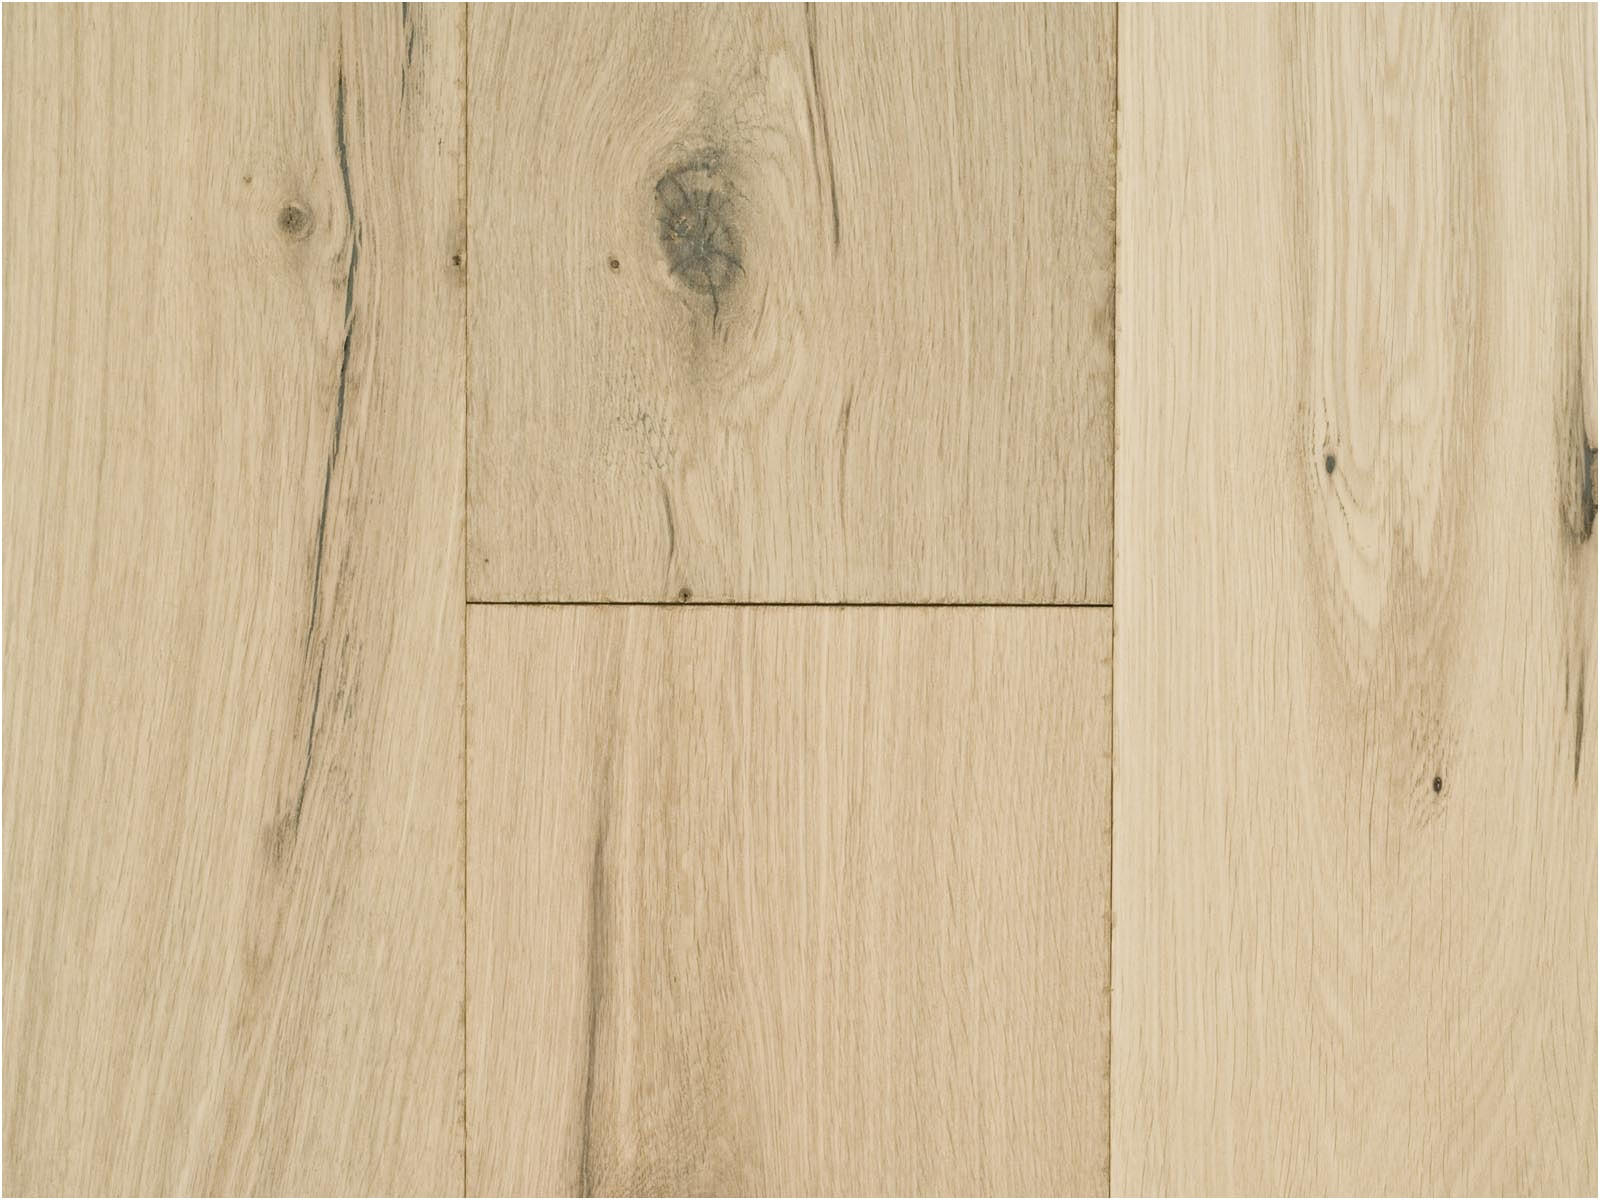 22 Wonderful Engineered Hardwood Flooring Images 2024 free download engineered hardwood flooring images of white oak engineered hardwood flooring flooring design within duchateau hardwood flooring houston tx discount engineered wood